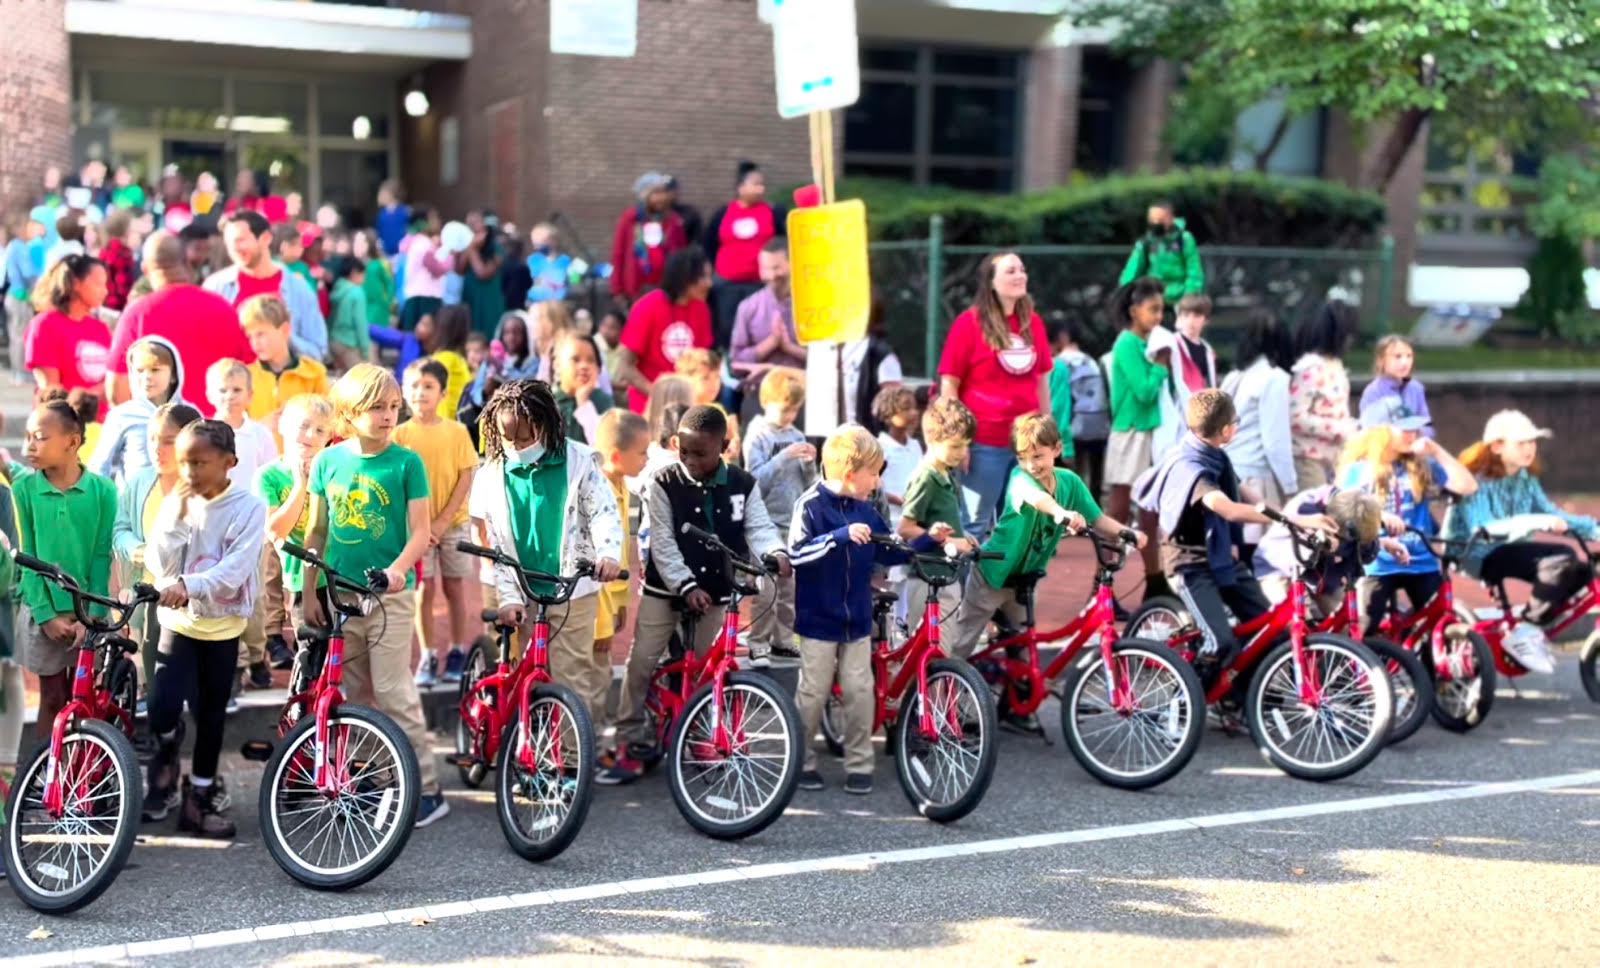 2nd grade students from Ludlow-Taylor Elementary School enjoying their new bike fleet